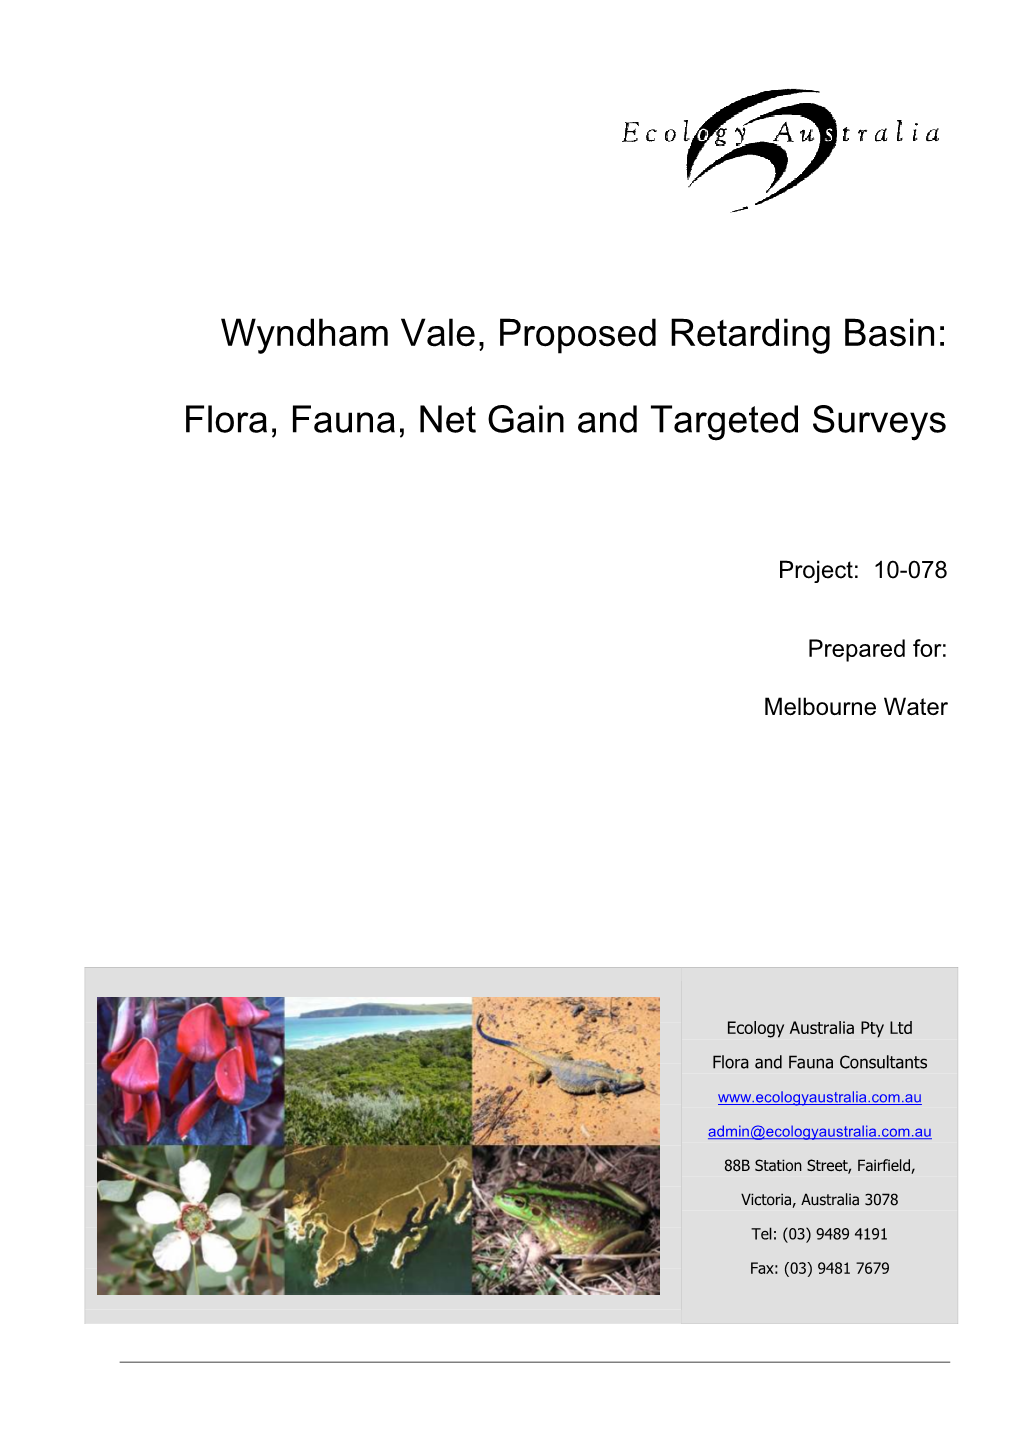 Wyndham Vale, Proposed Retarding Basin: Flora, Fauna, Net Gain and Targeted Surveys